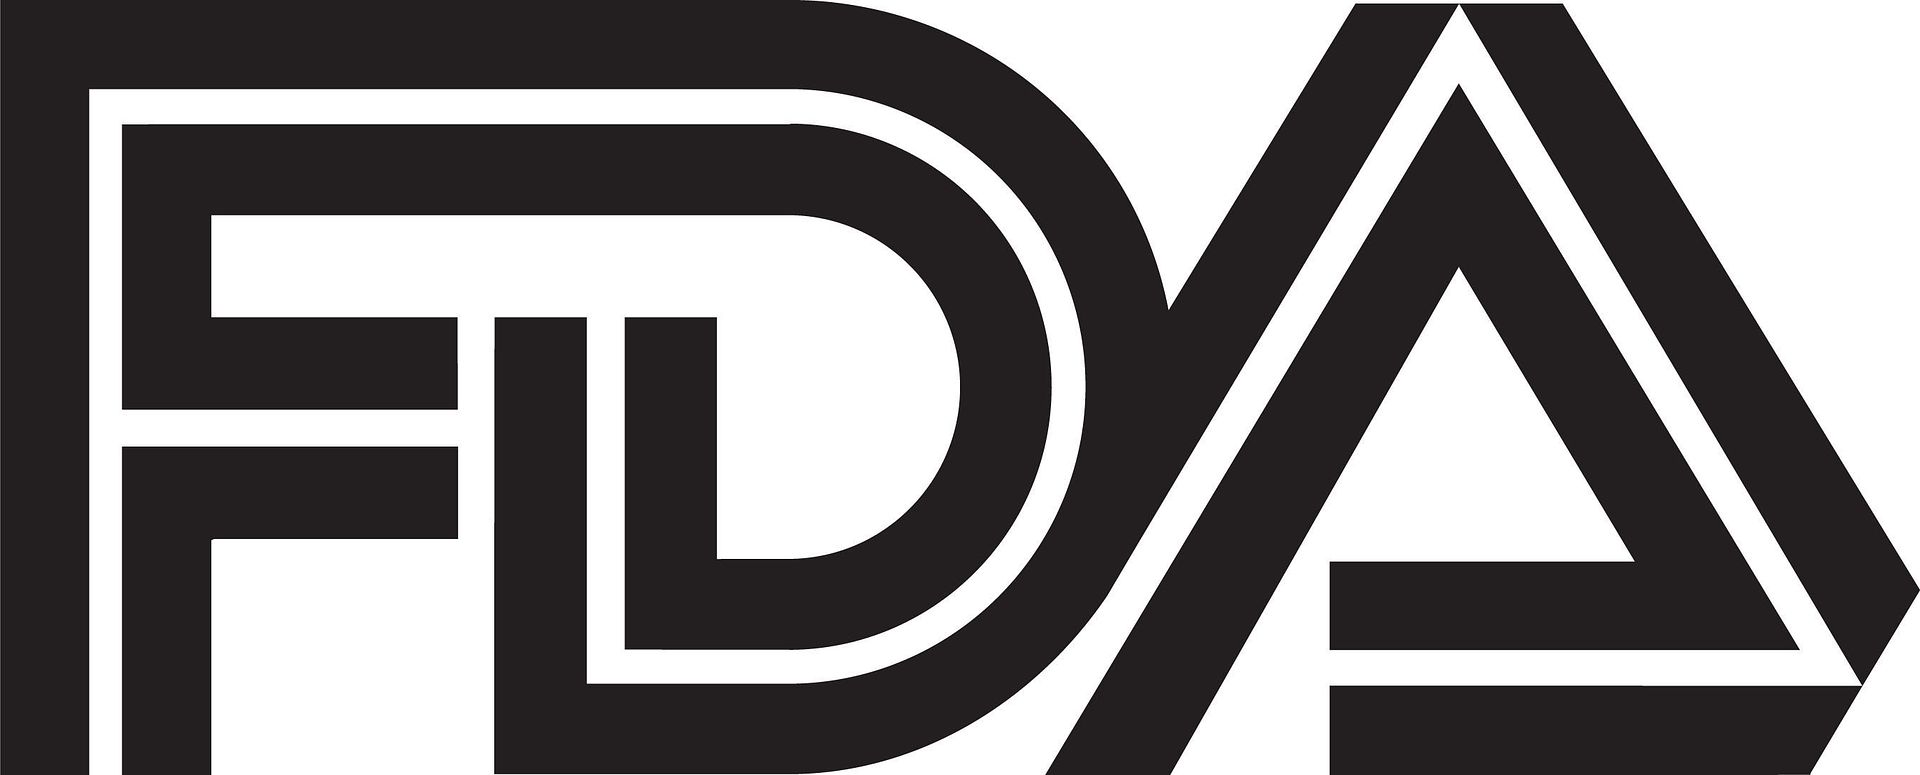 fda-logotipo